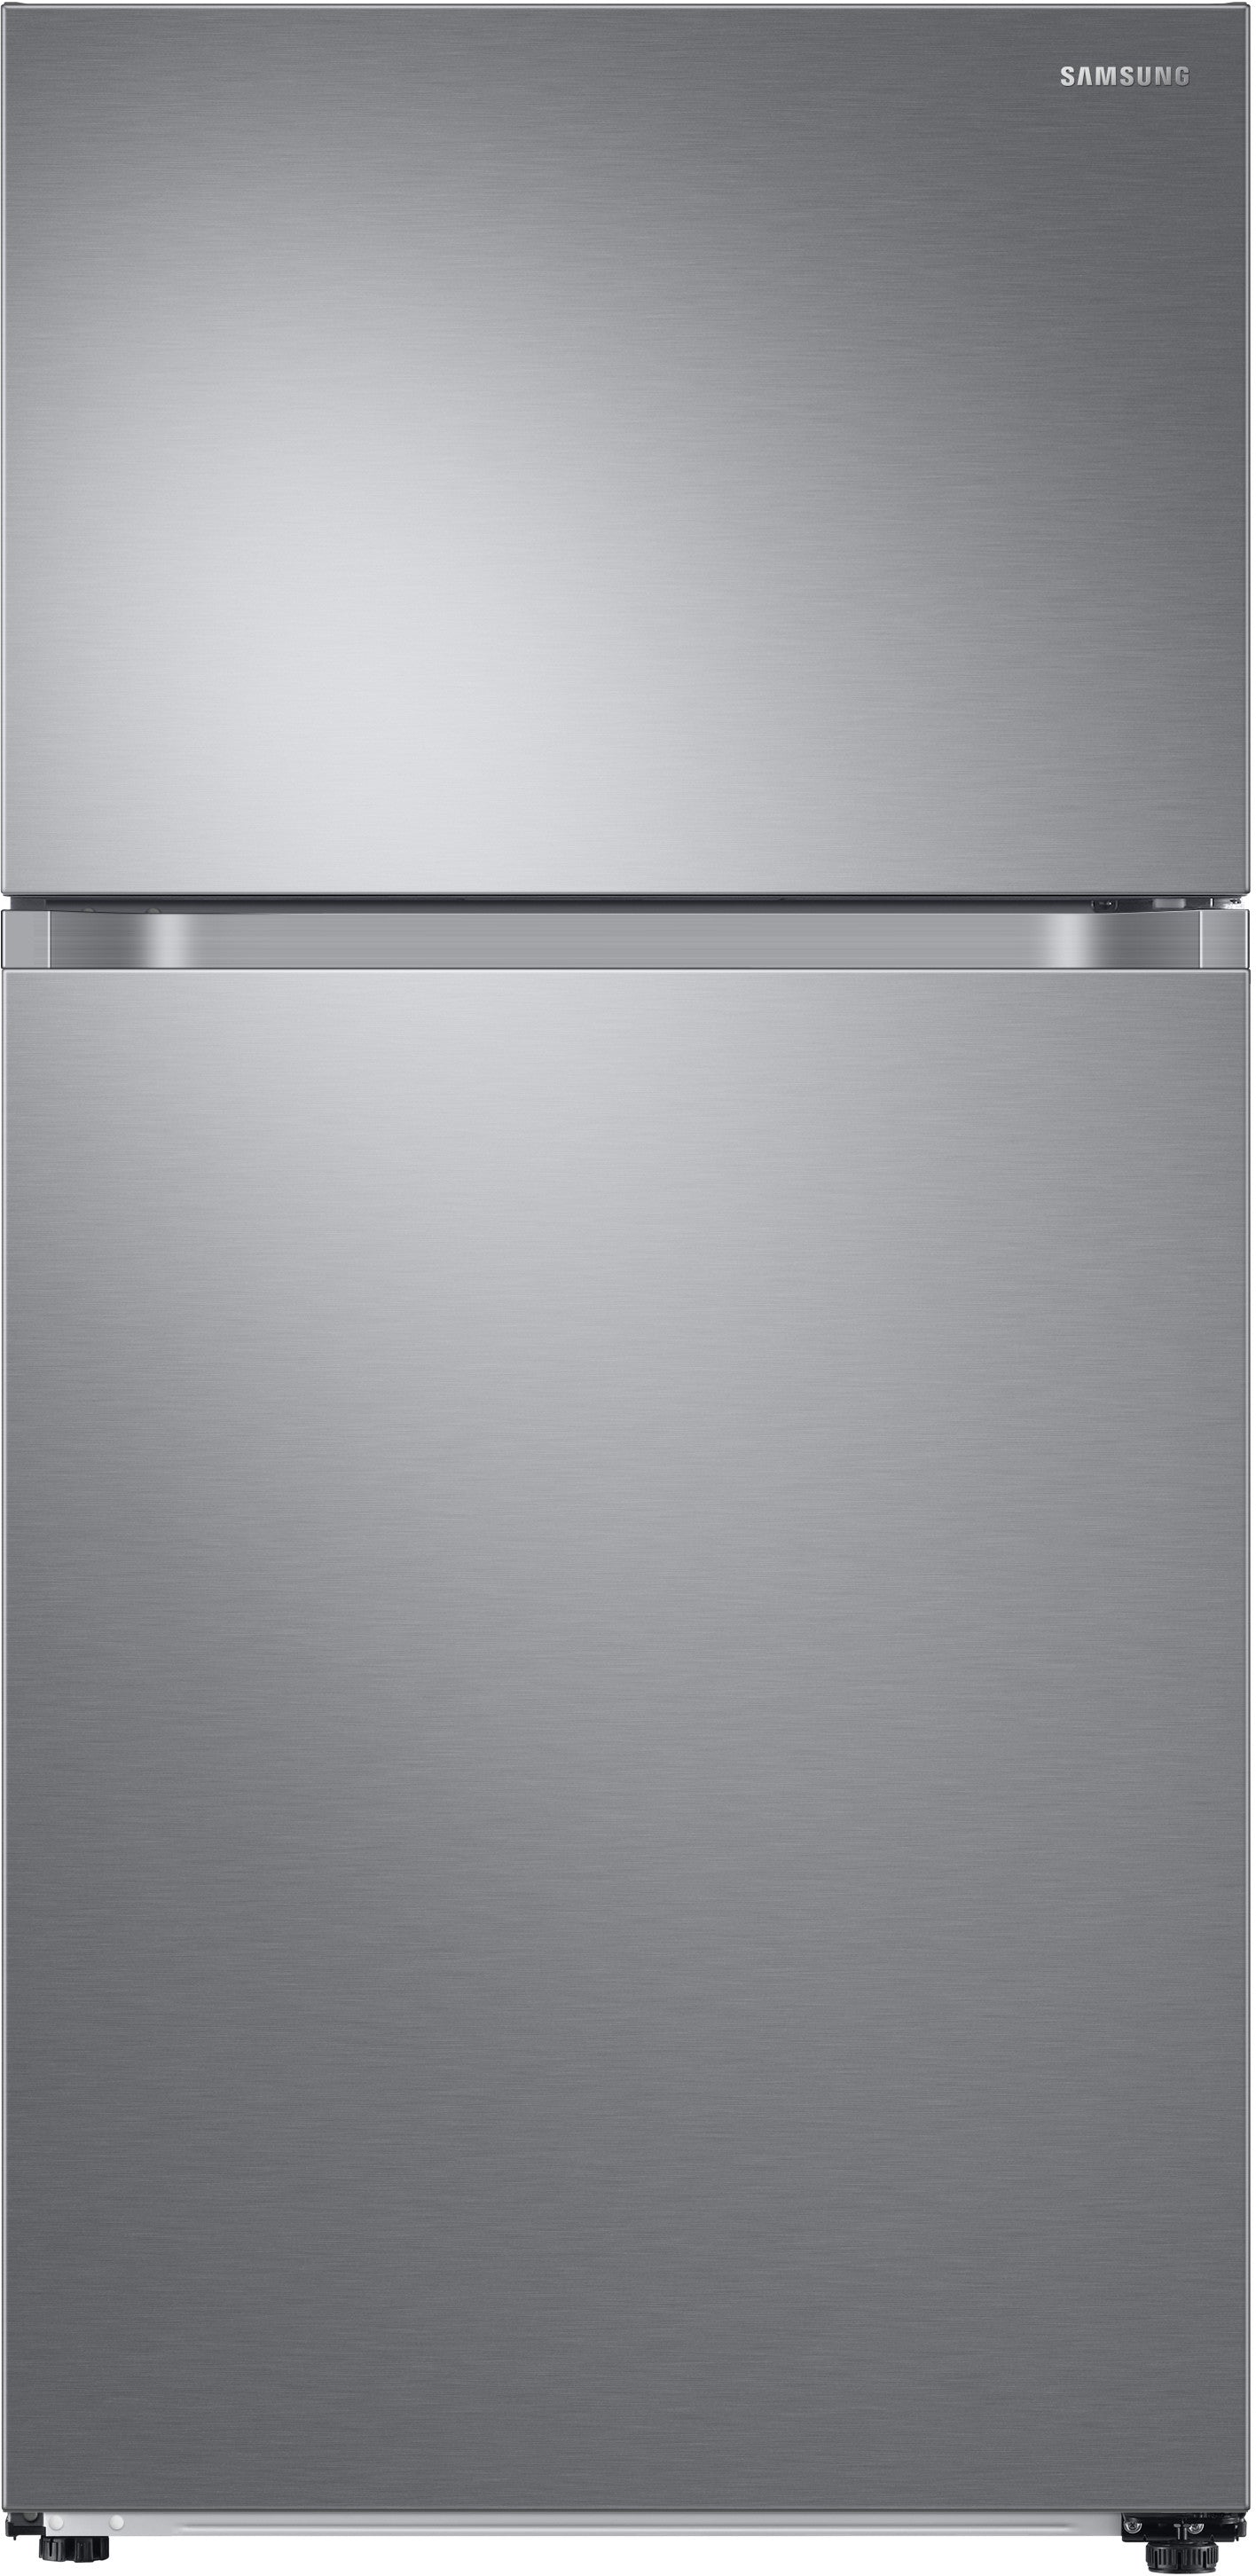 Samsung RT21M6213SR/AA 21 Cu. Ft. Top Freezer Refrigerator With Flex zone